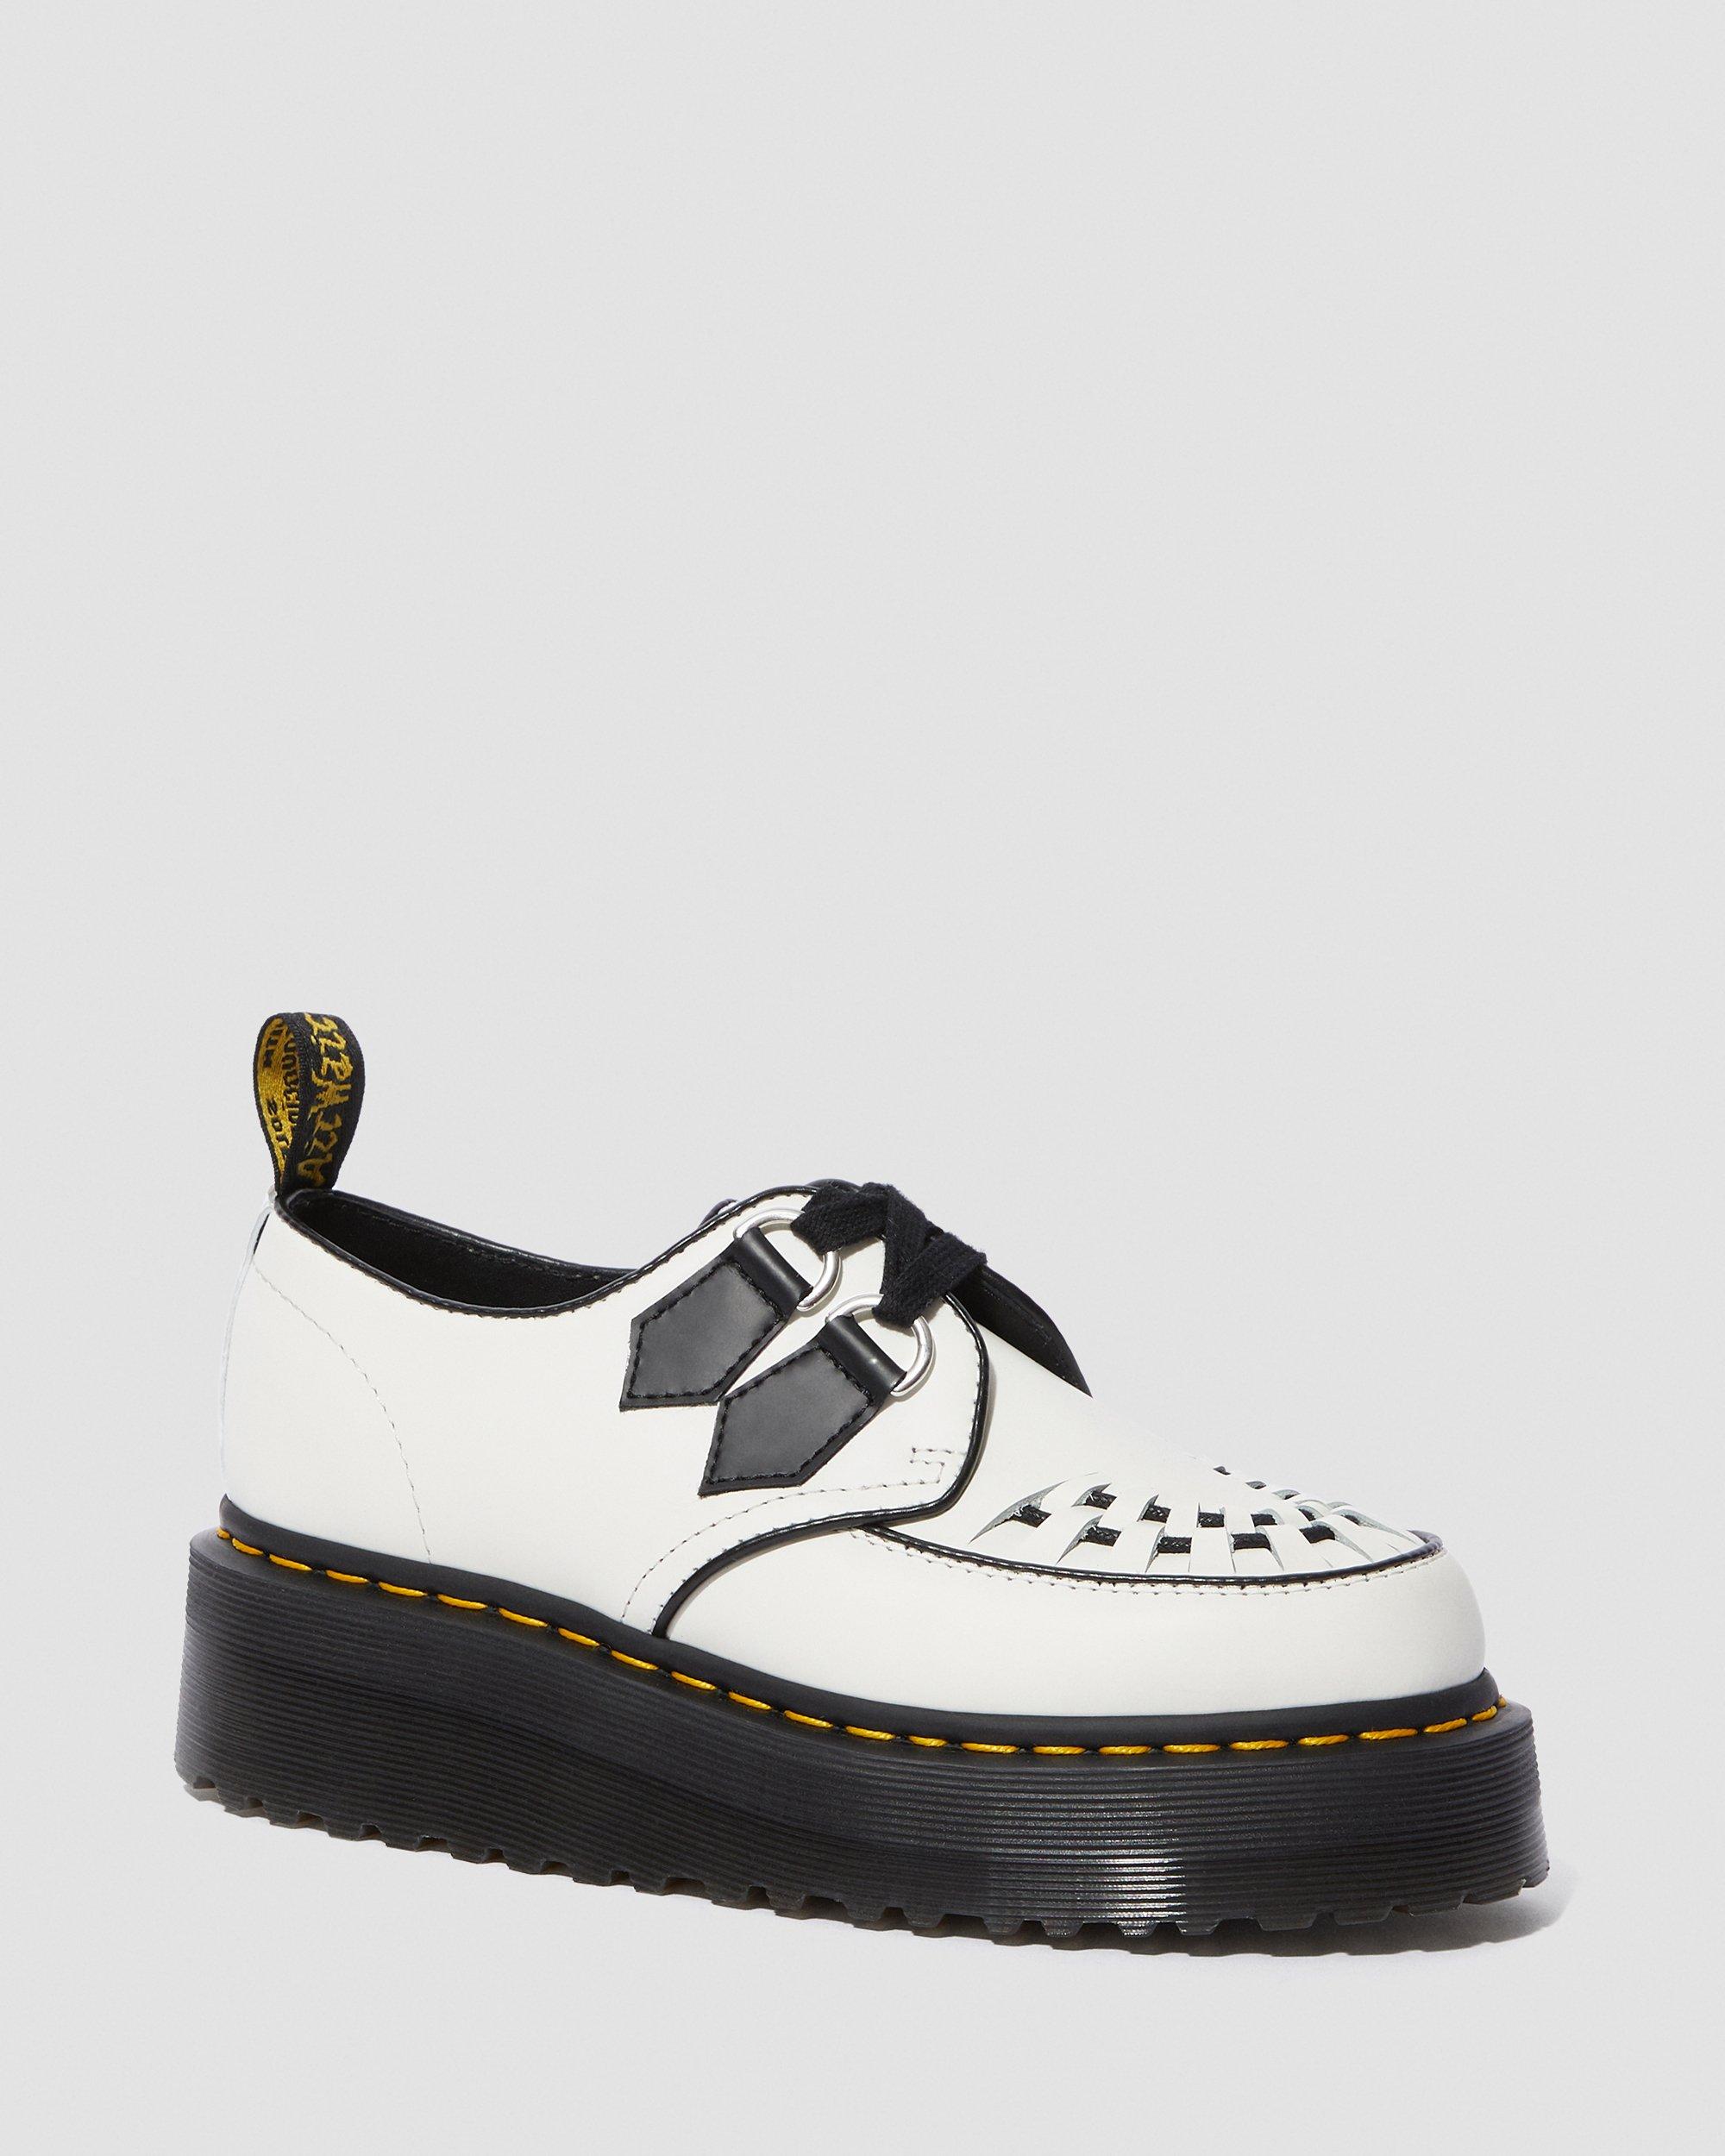 black and white platform shoes